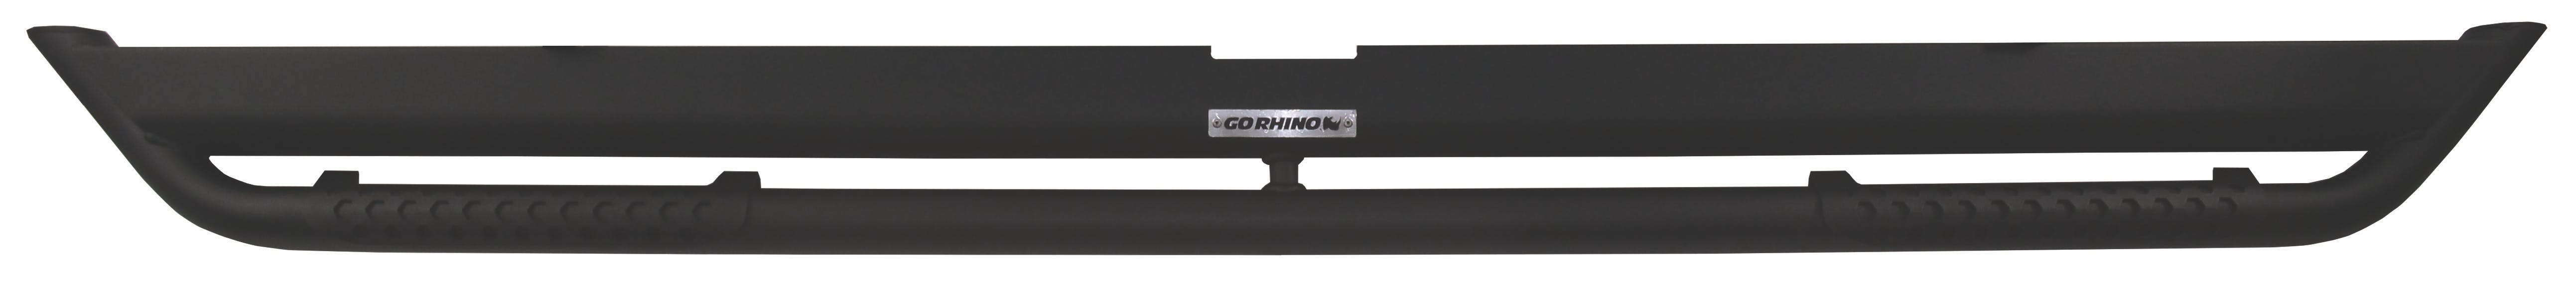 Go Rhino DS60073T Dominator Extreme DS Sliders